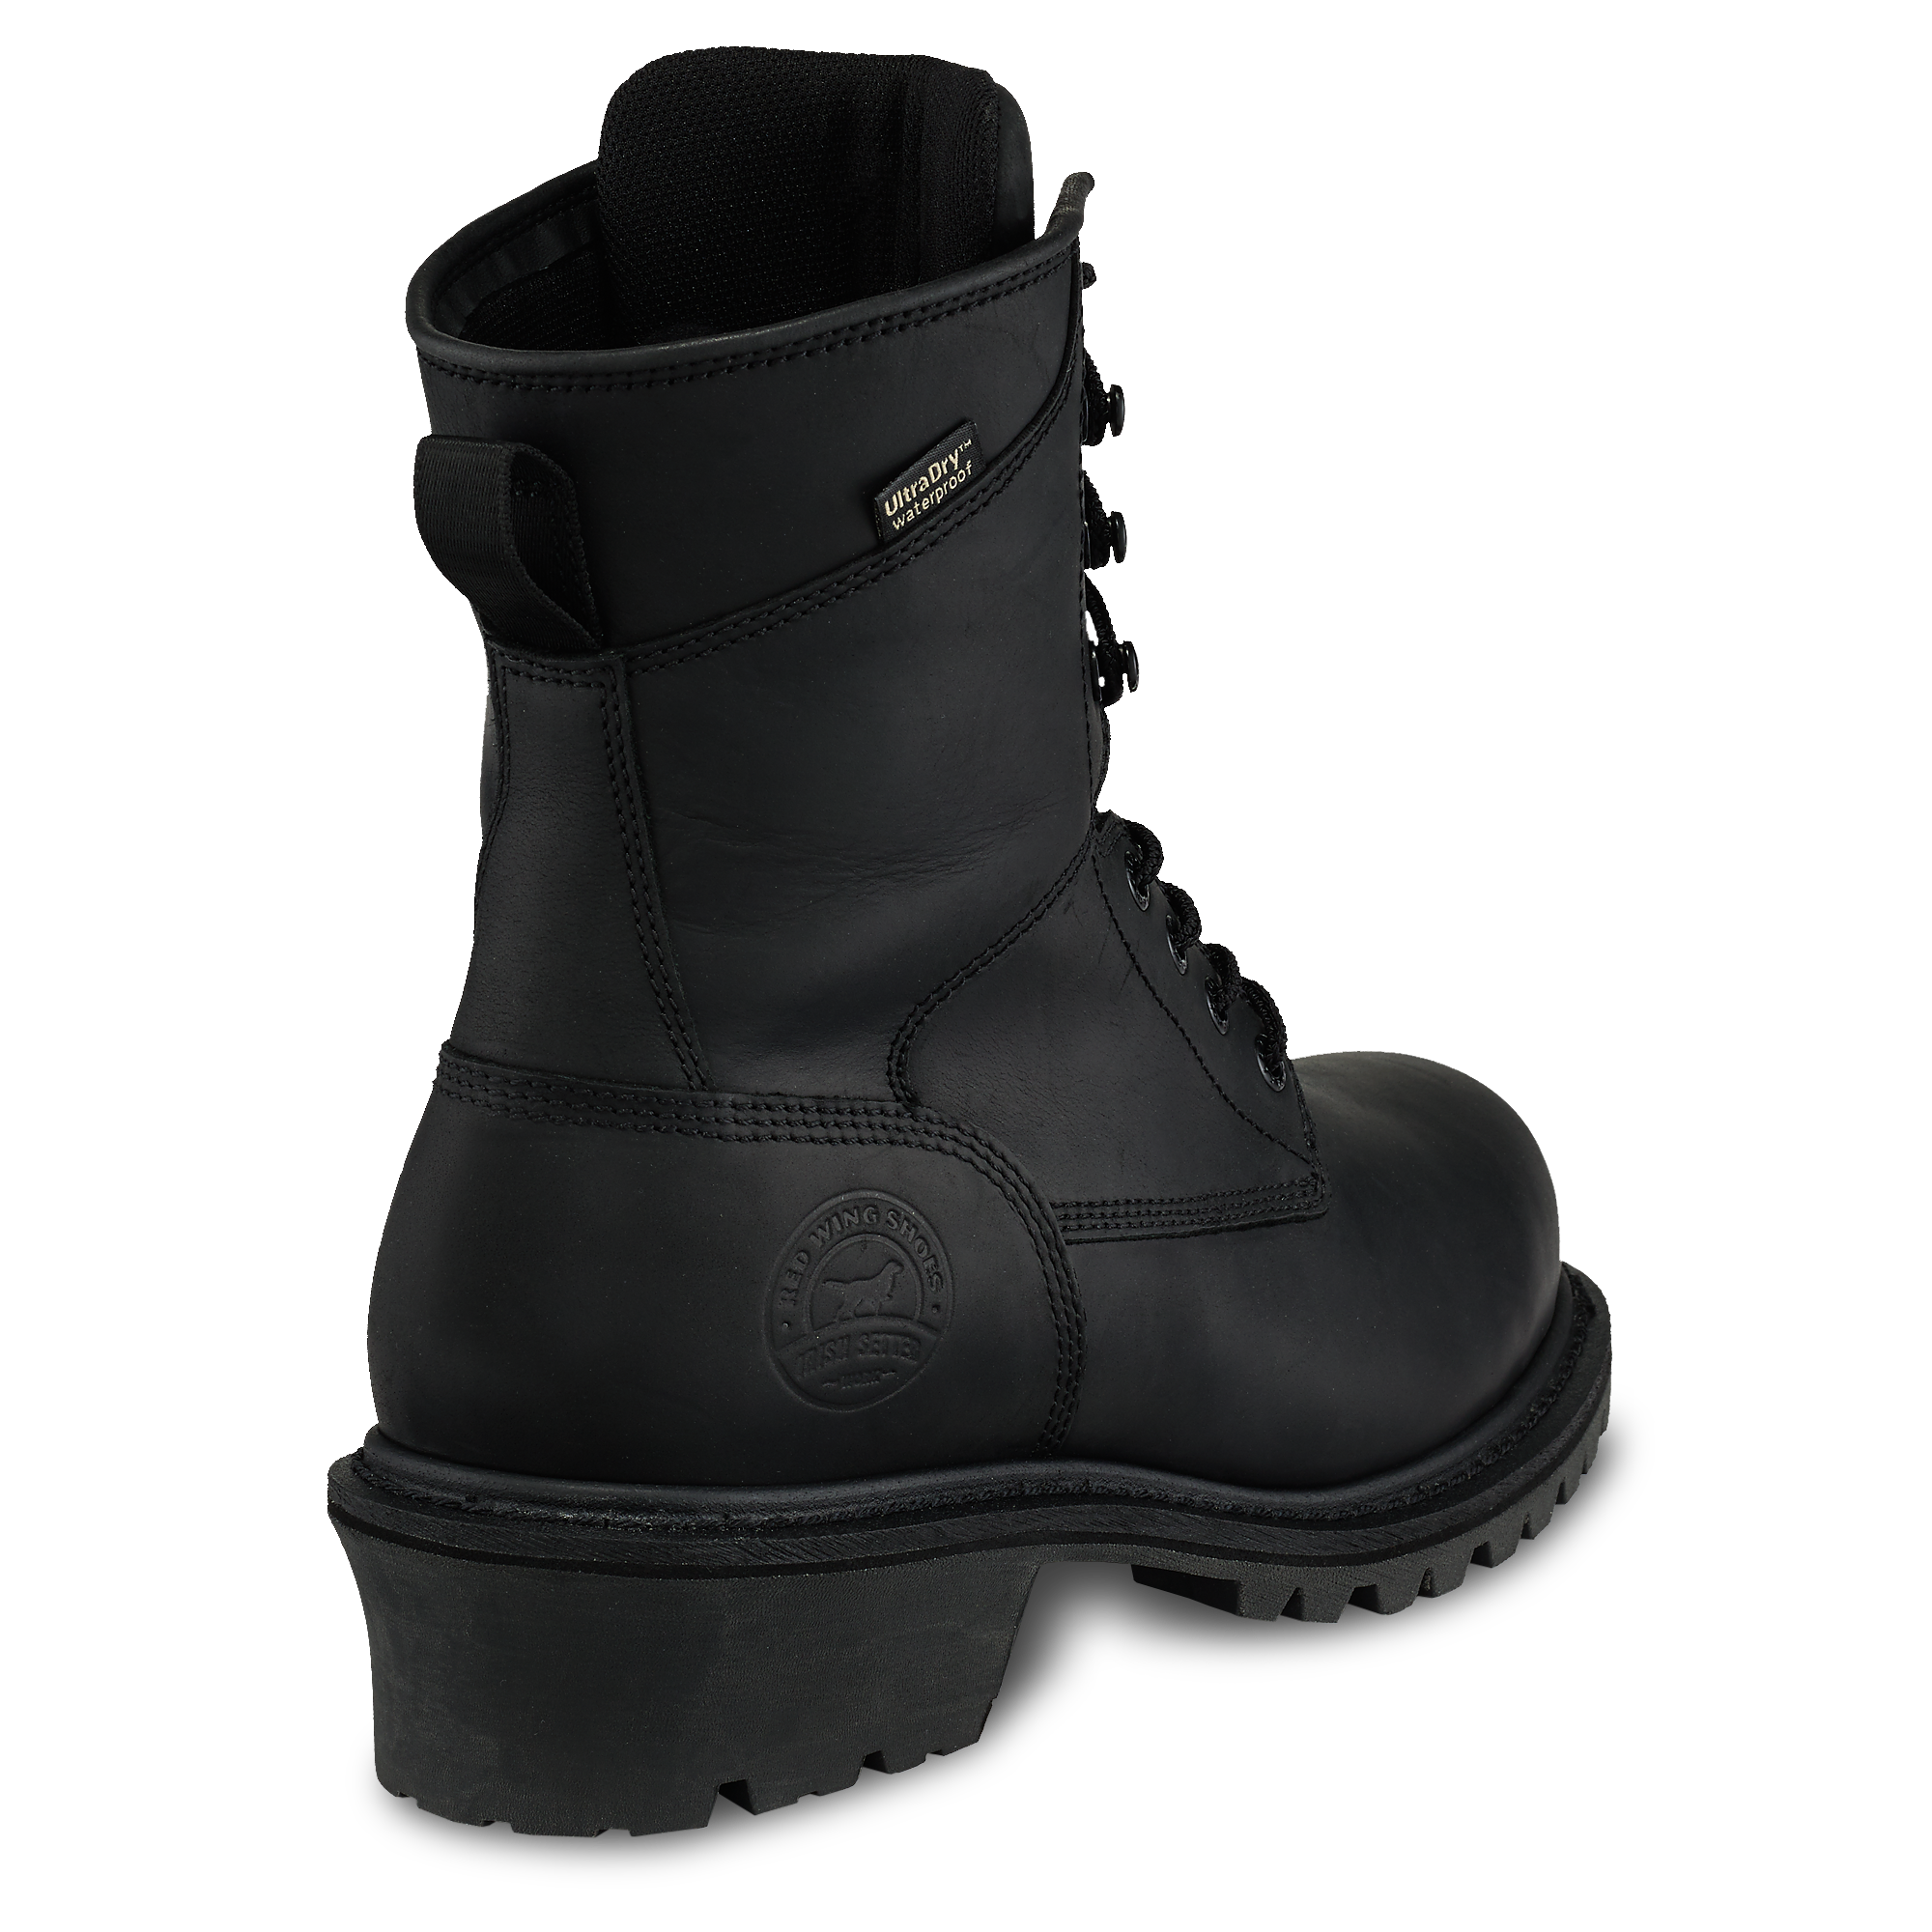 83836 -  Irish Setter Men's 8-inch Mesabi Safety Toe Boots